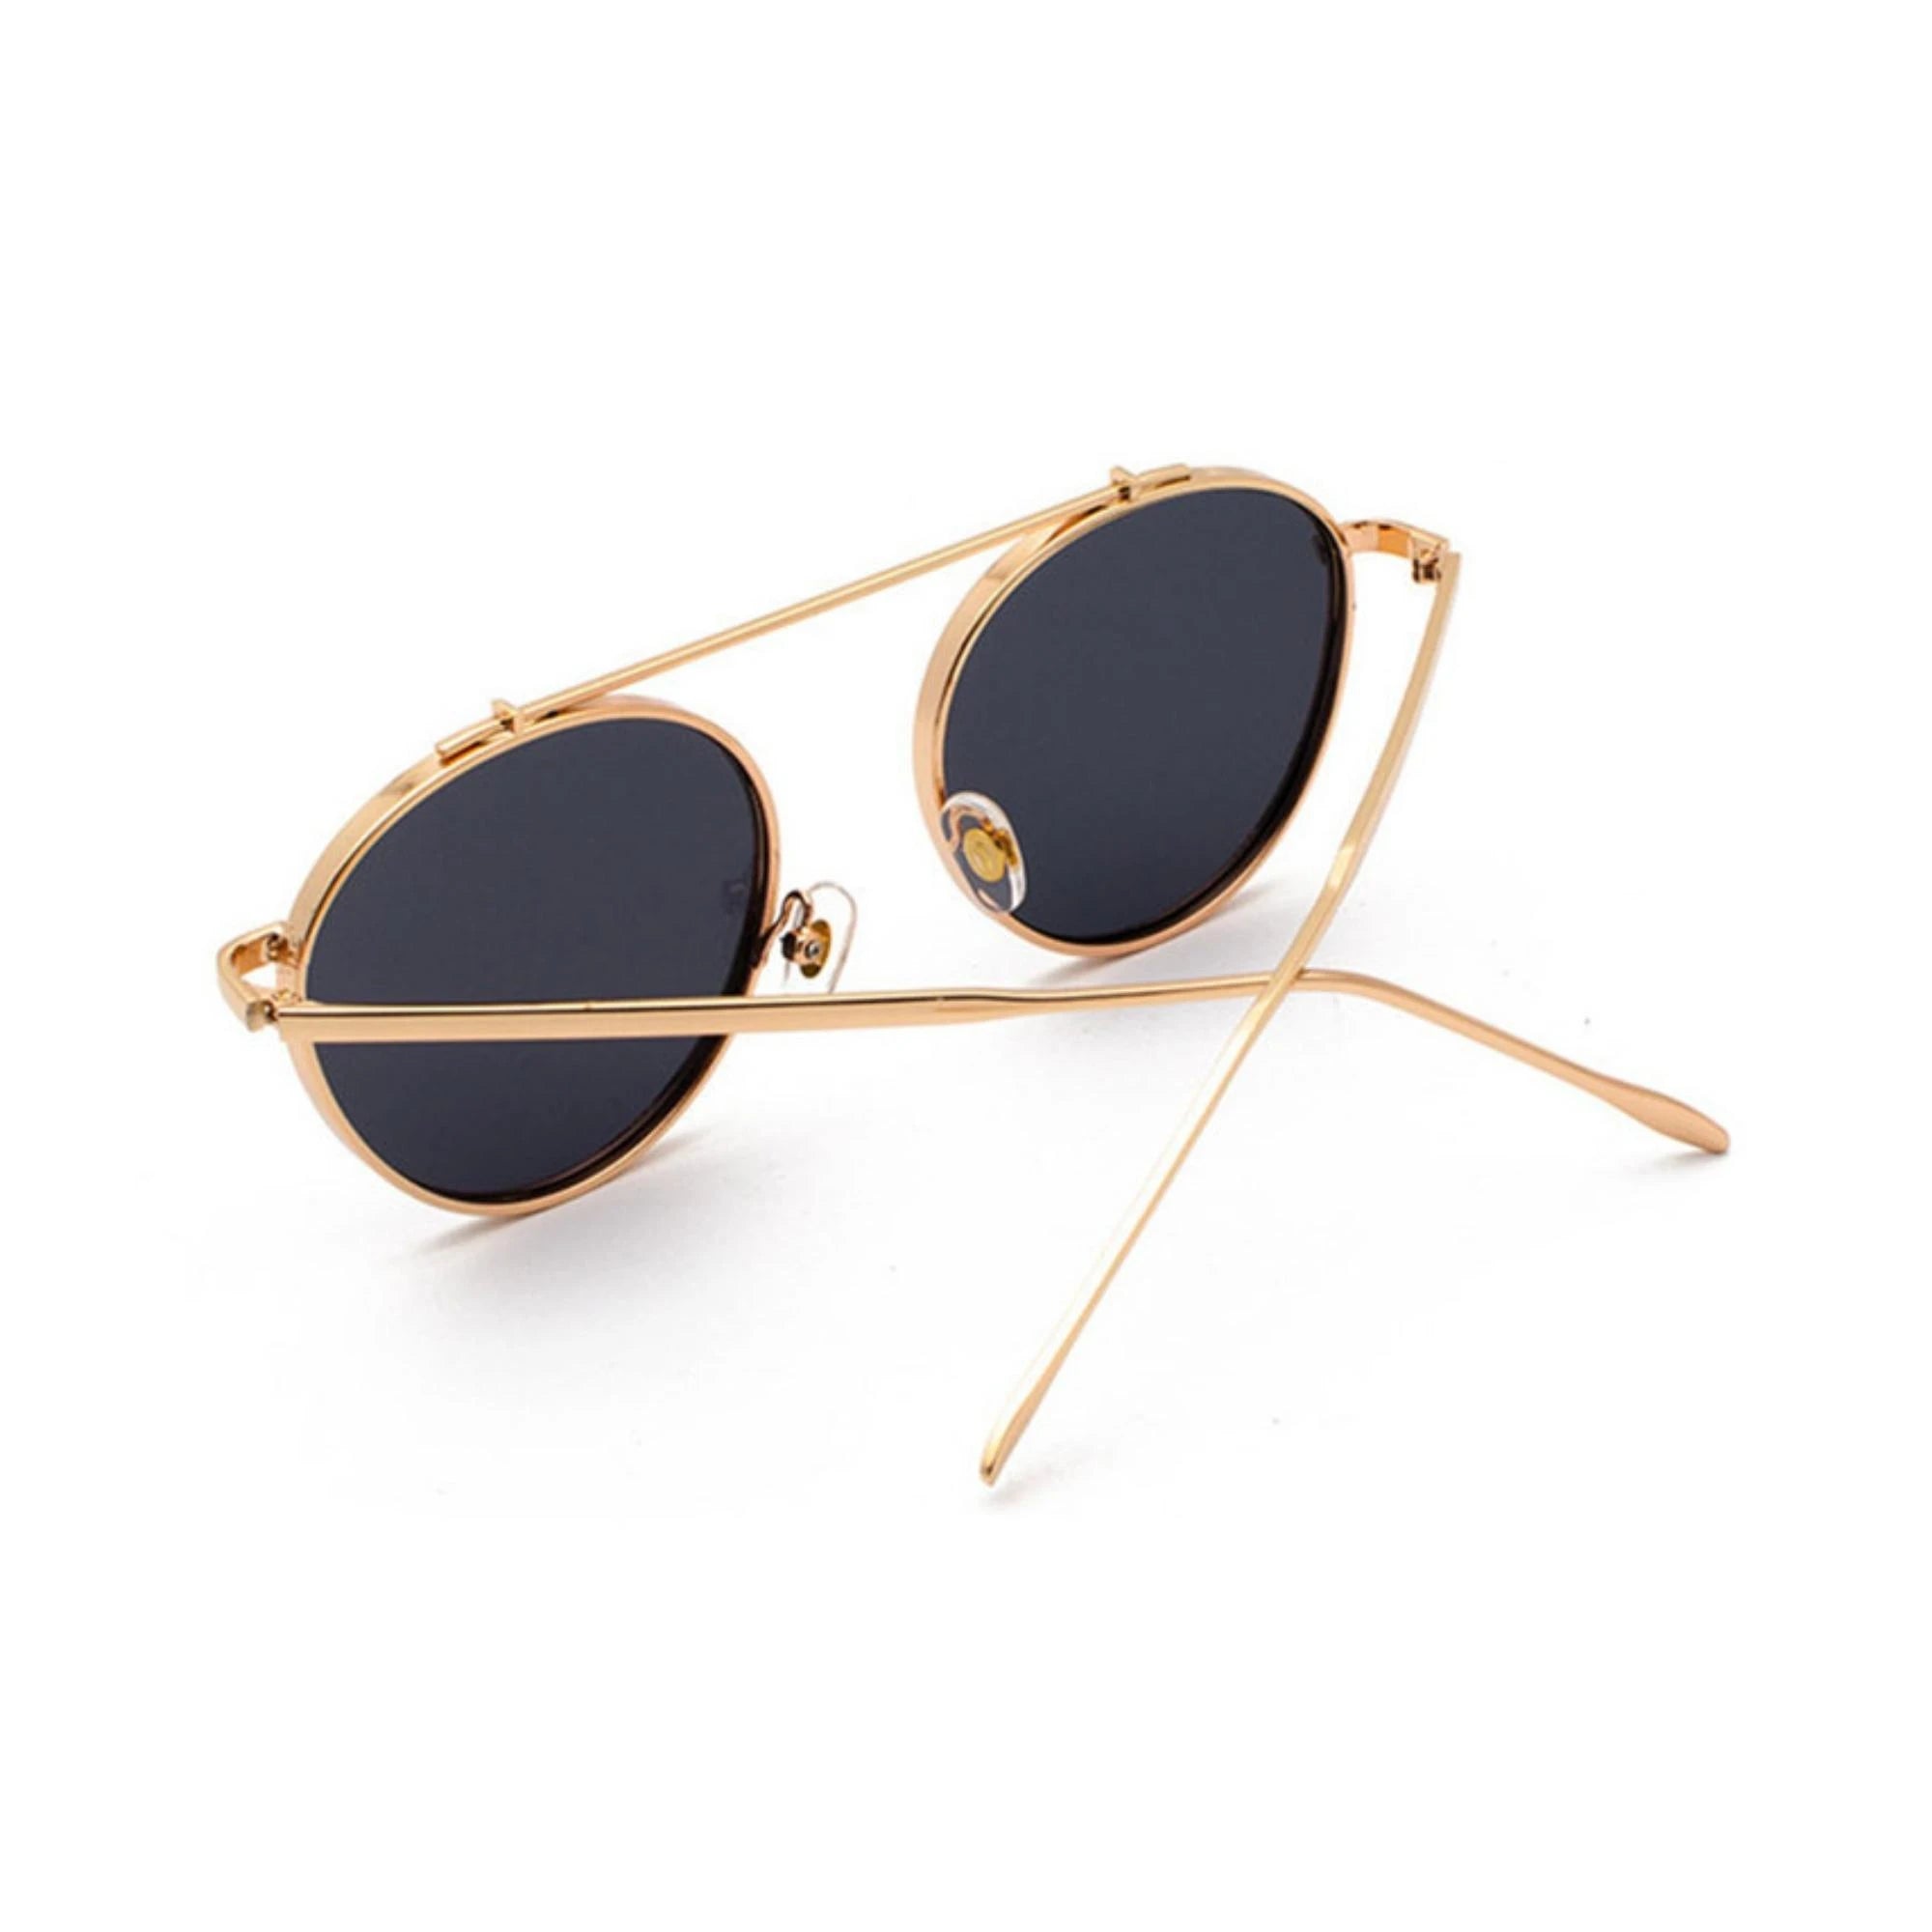 DISC Series Metal Frame Round Sunglasses - Gold Black